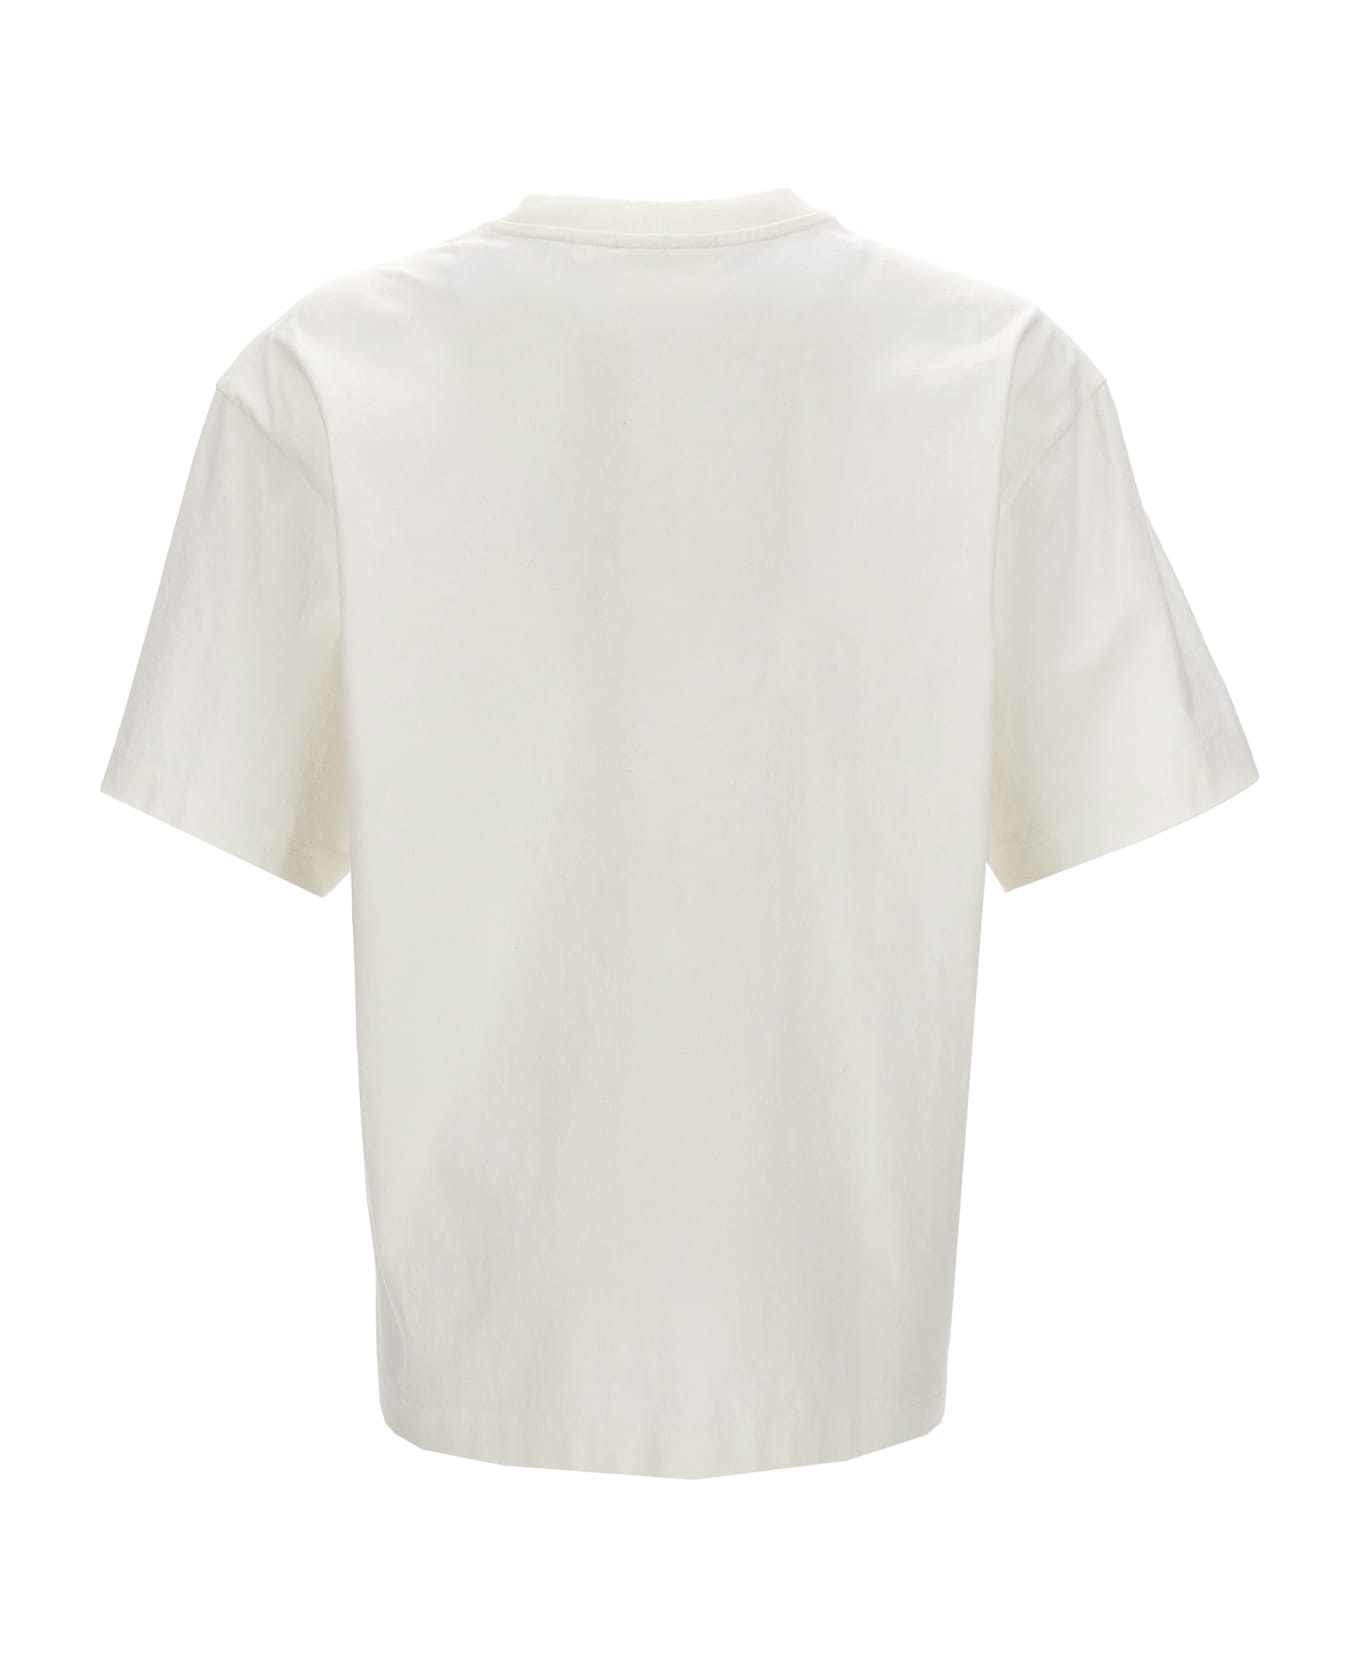 Axel Arigato 'essential' T-shirt - White/Black